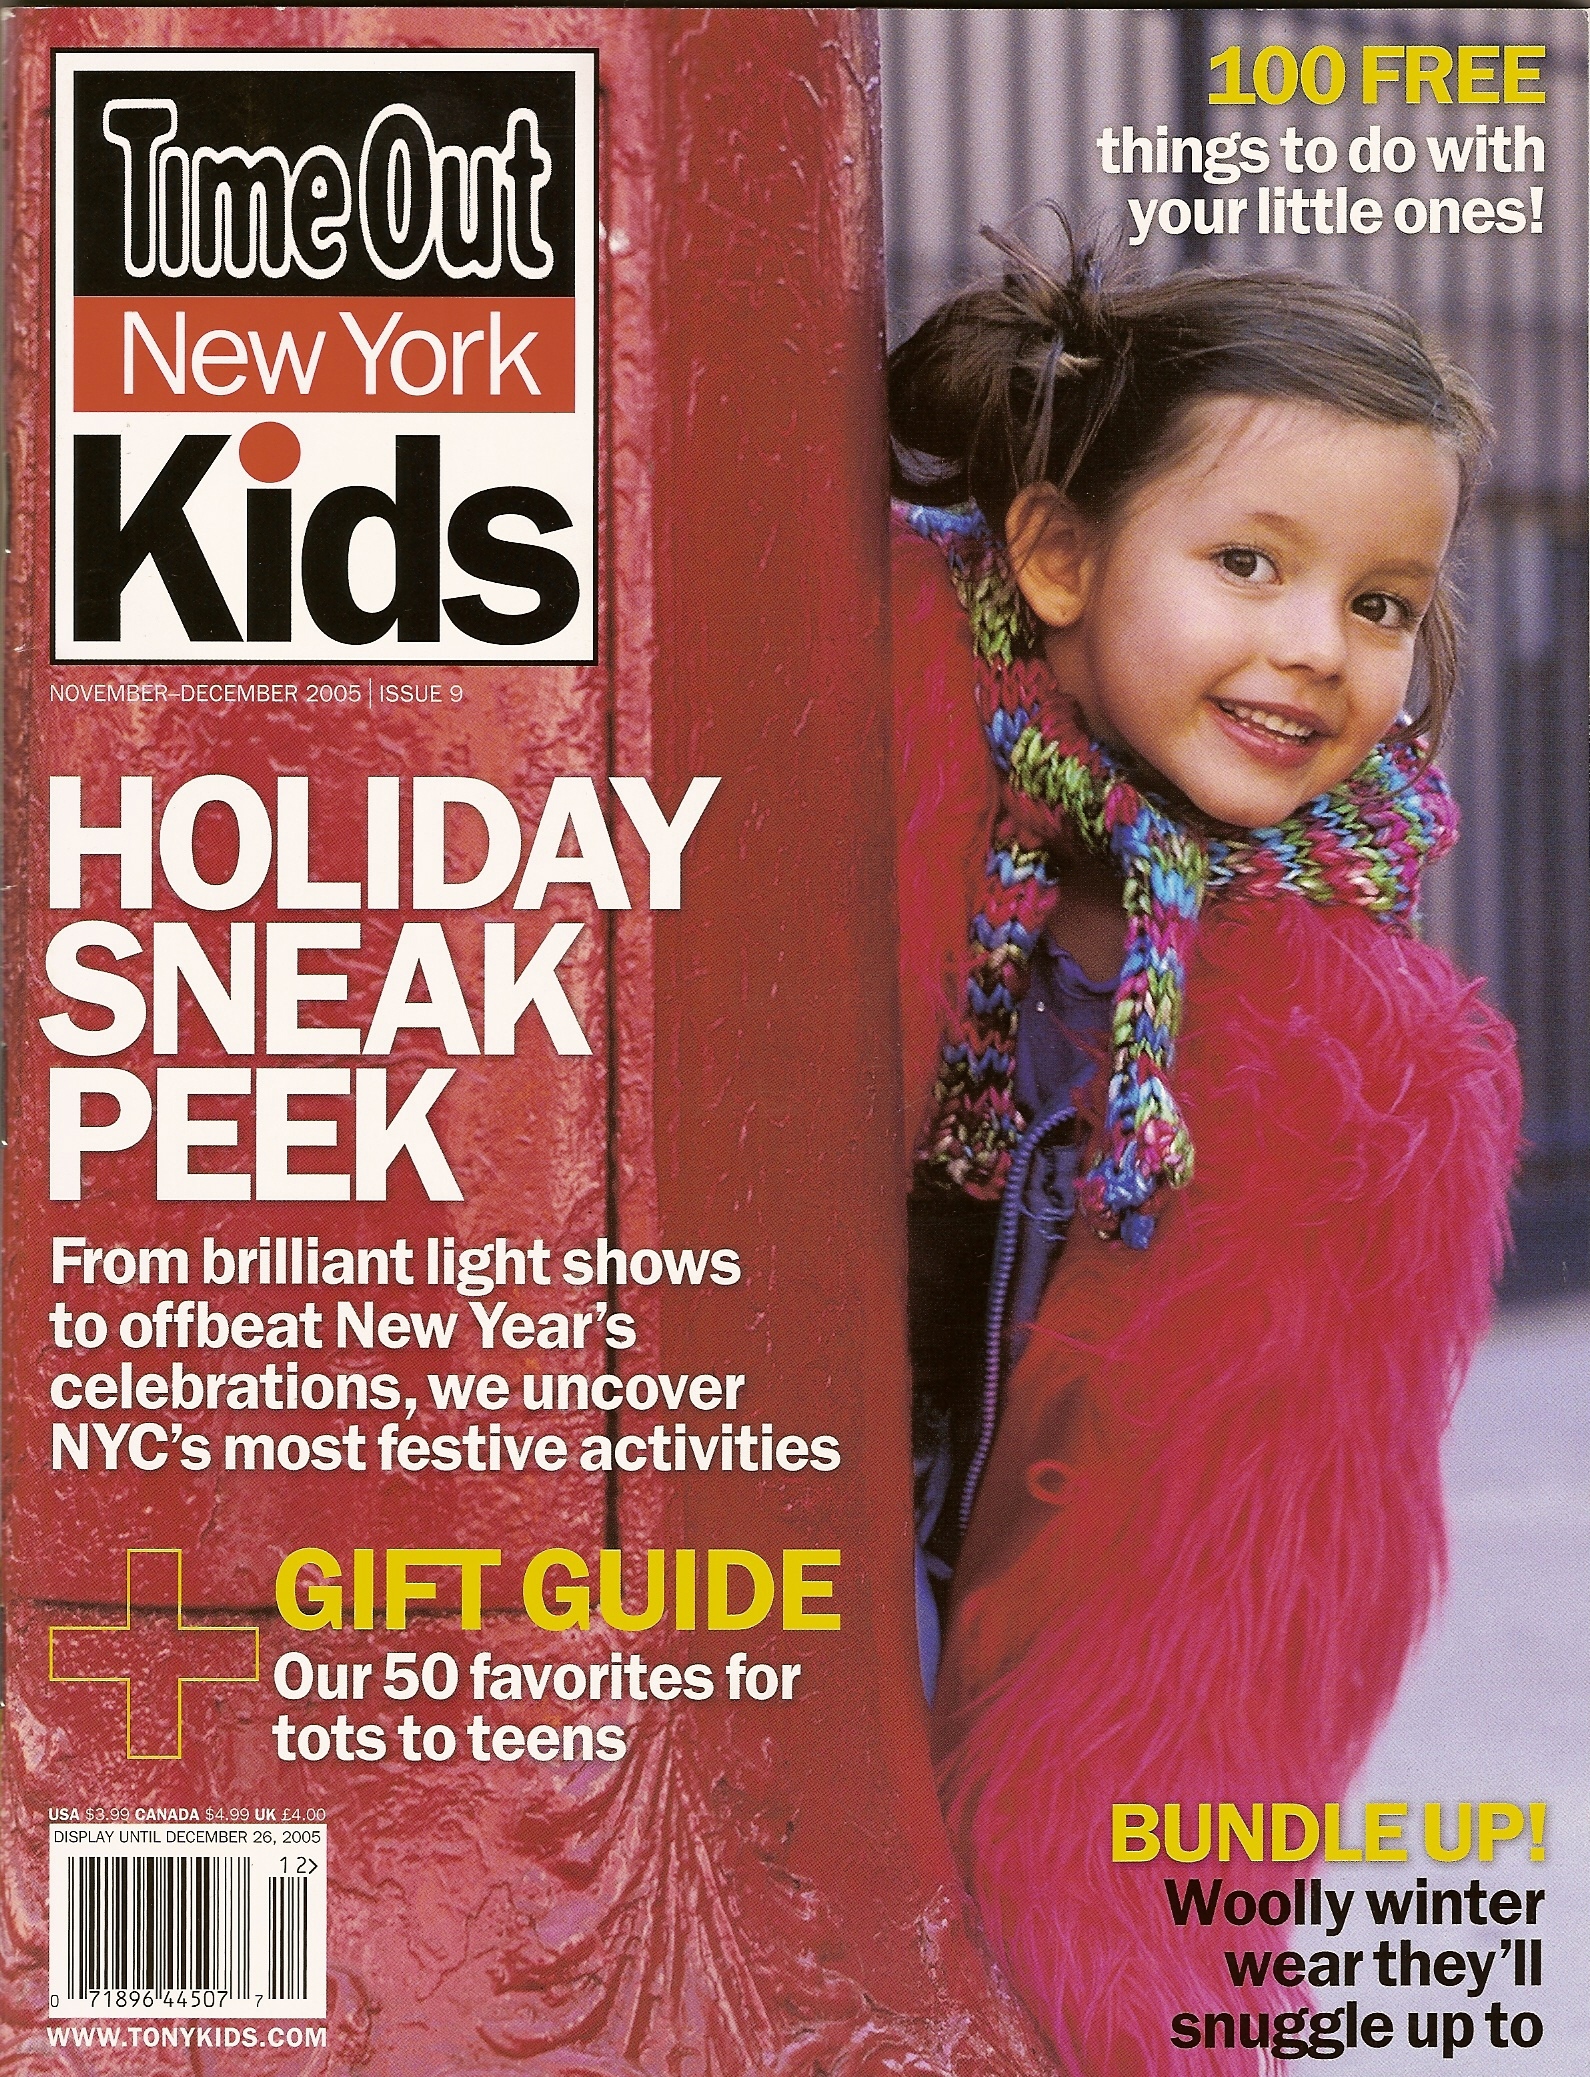 Time Out New York Kids (USA) 1 November 2005, November-December, Iss. 9 